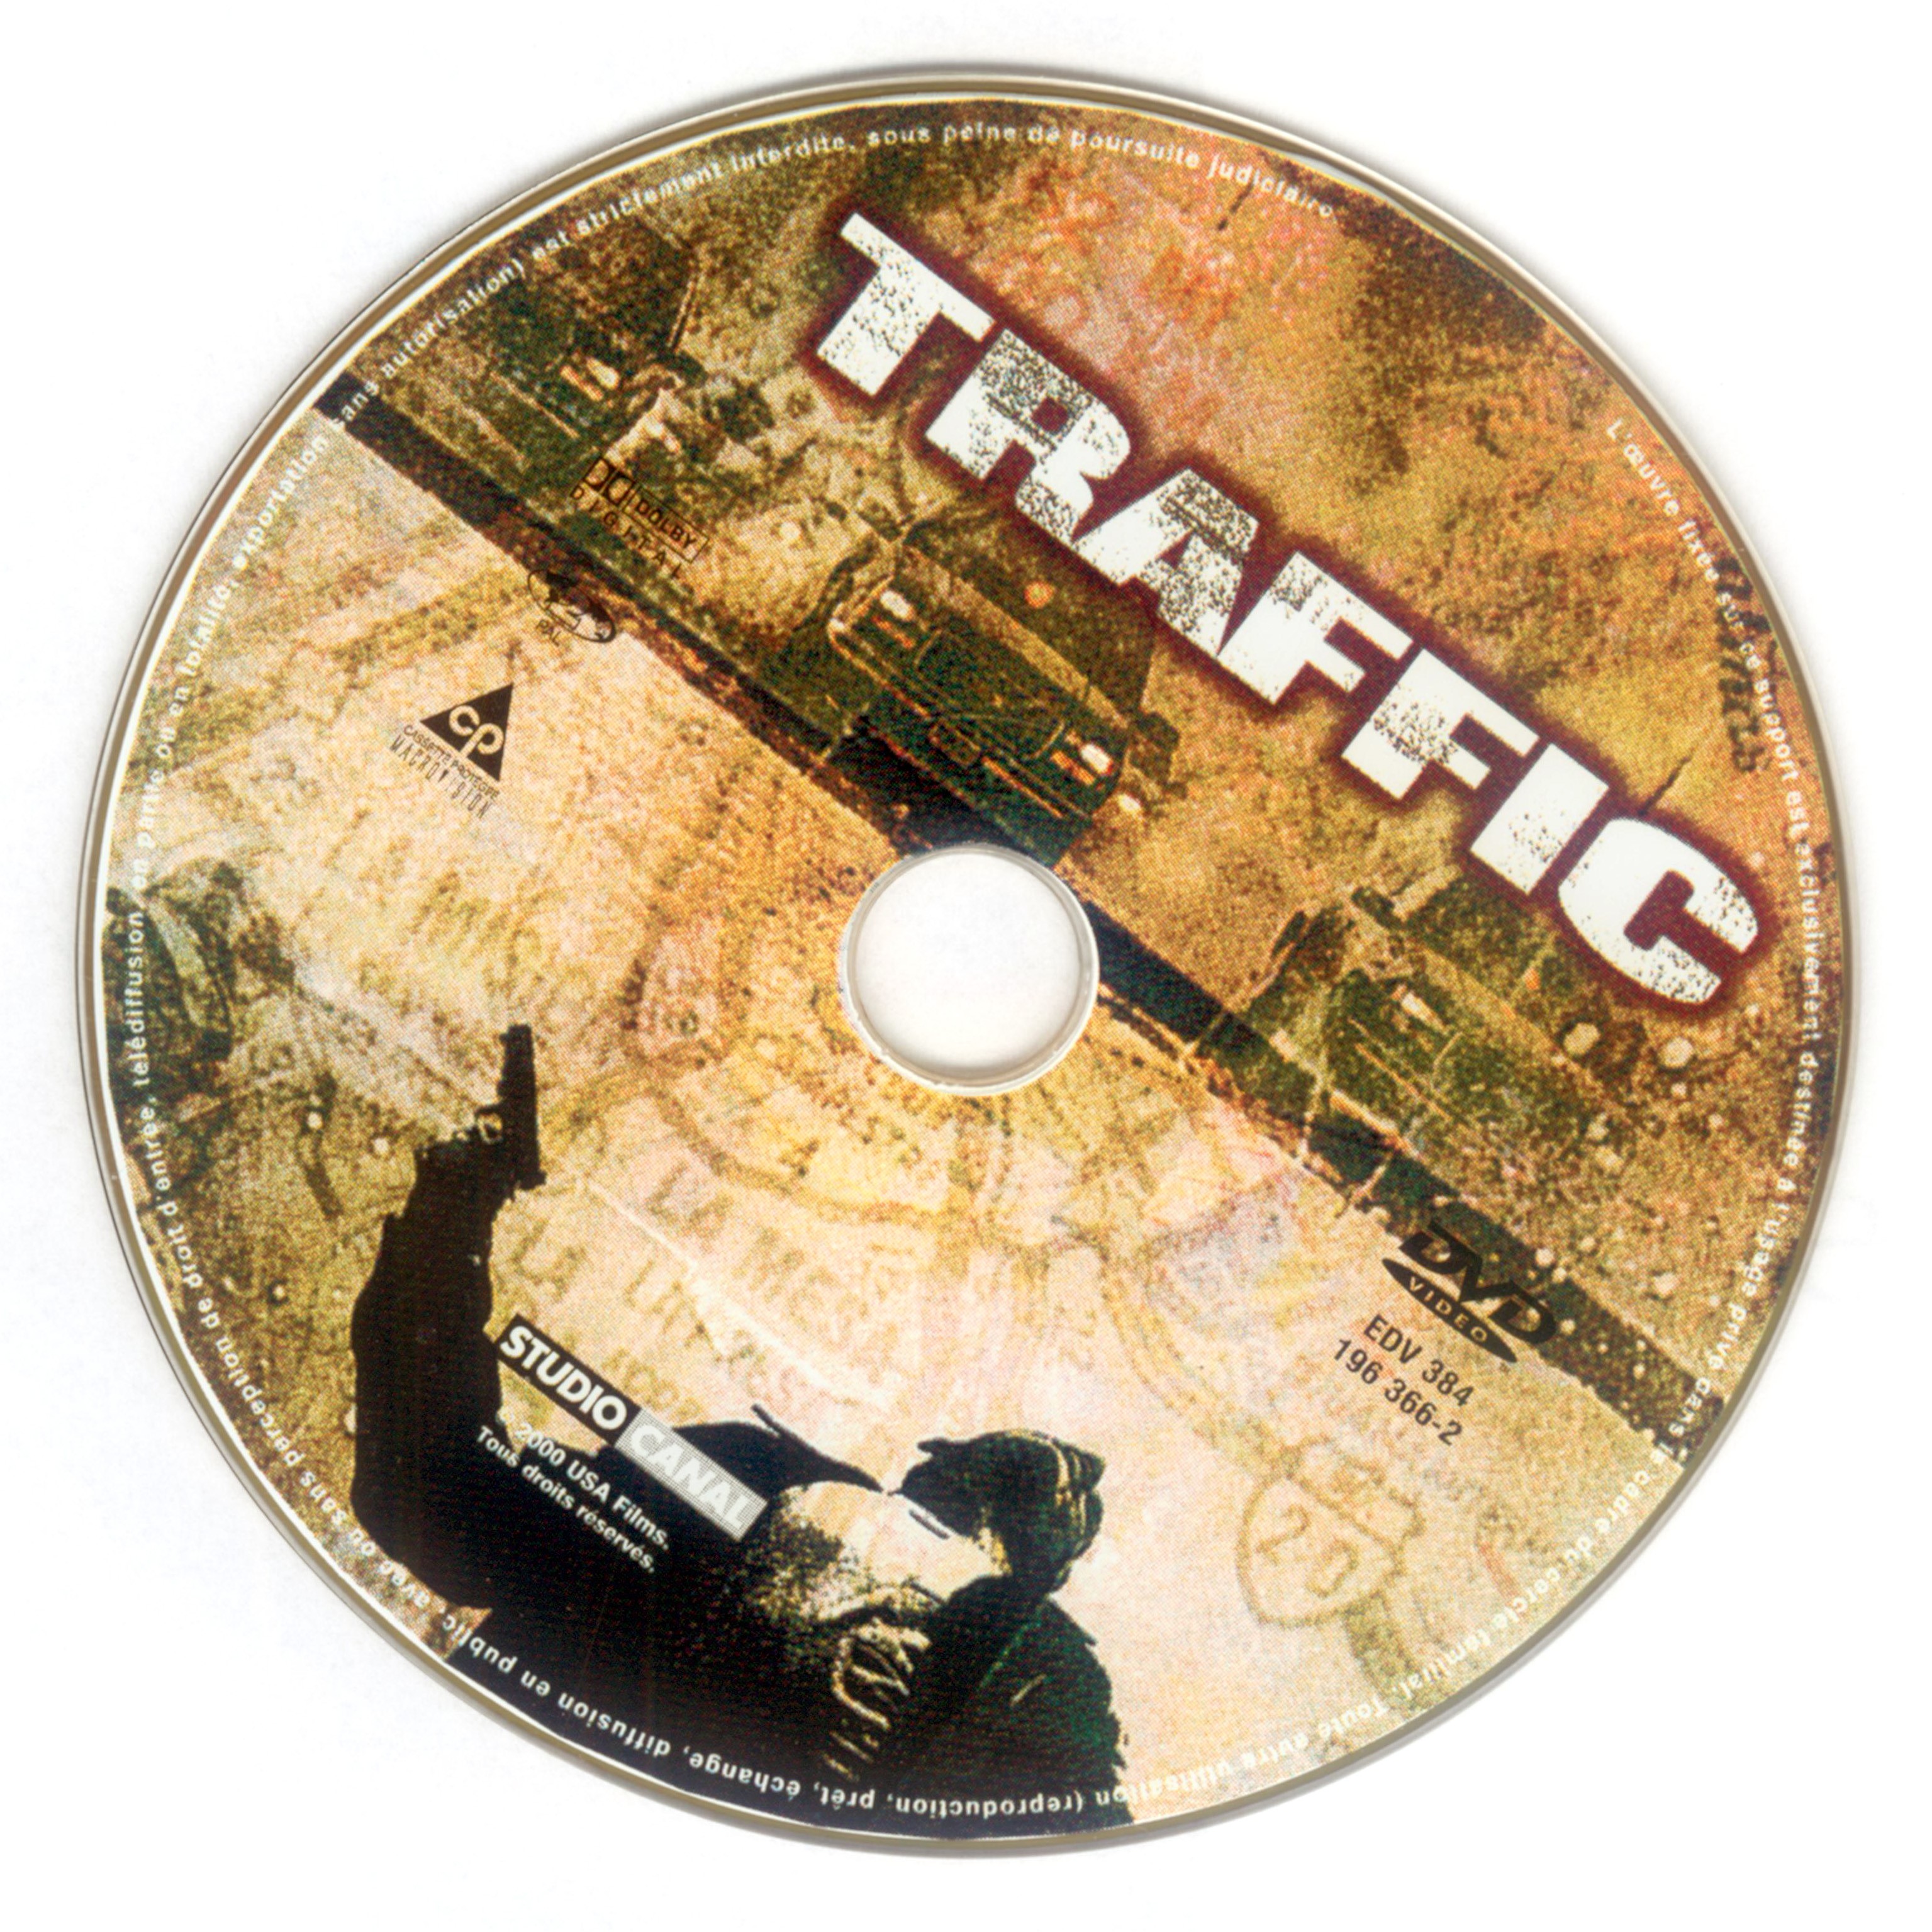 Traffic DISC 1